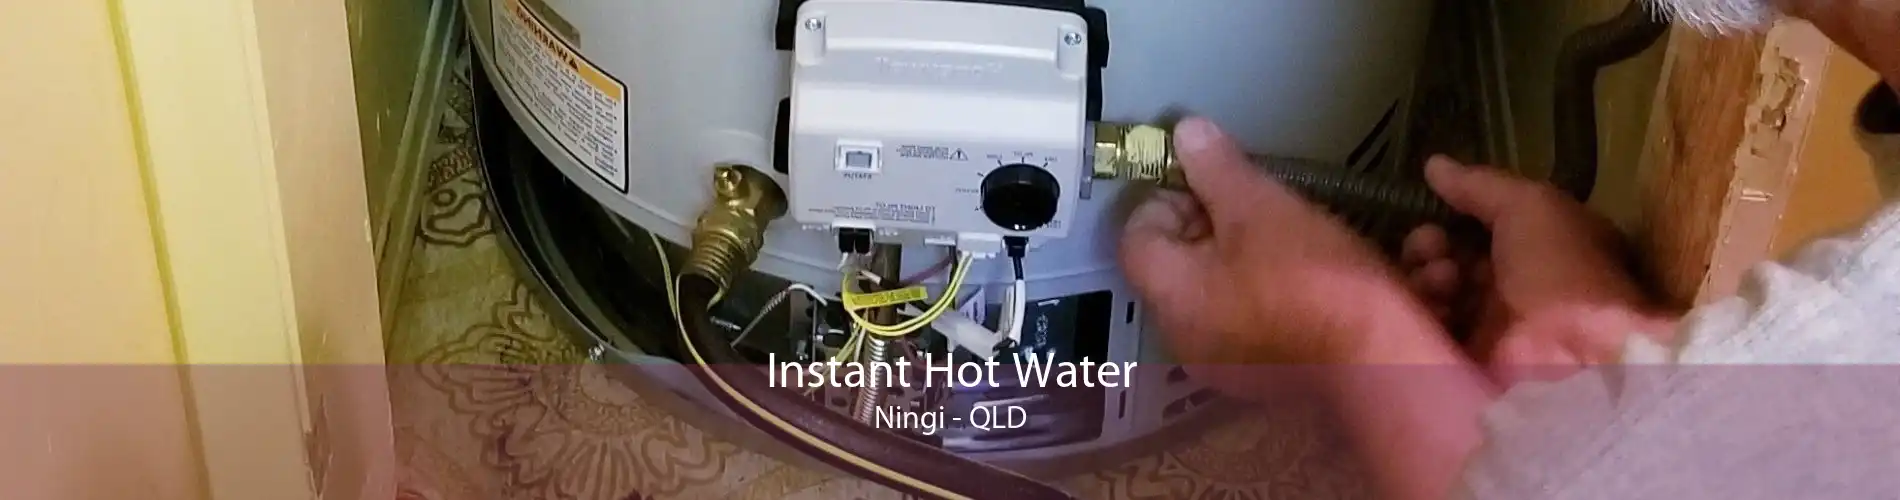 Instant Hot Water Ningi - QLD